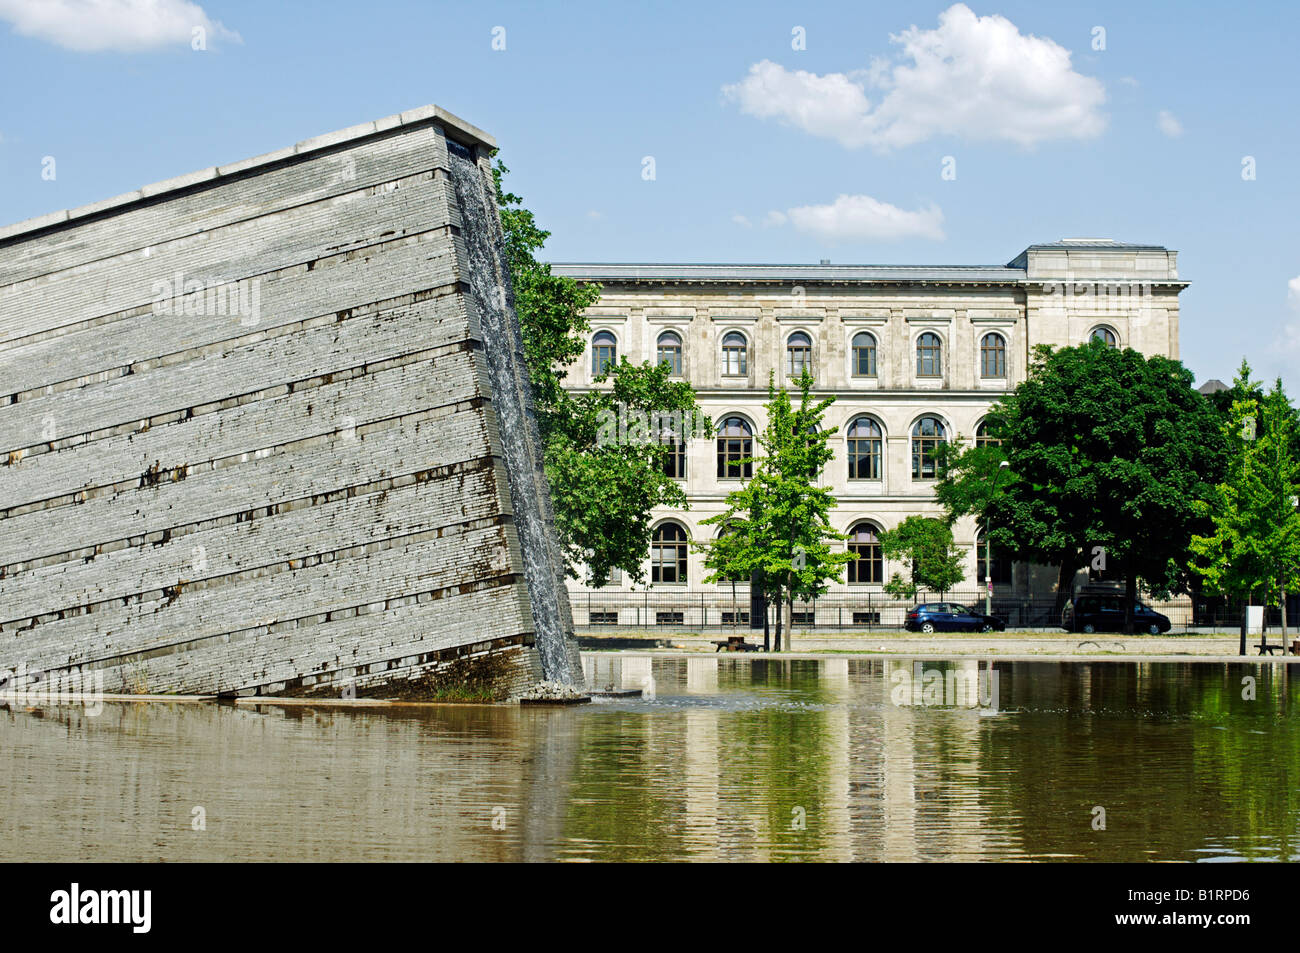 Fuente escultórica, sinkende Mauer, el hundimiento de la pared, Invalidenpark, Berlín, Alemania, Europa Foto de stock